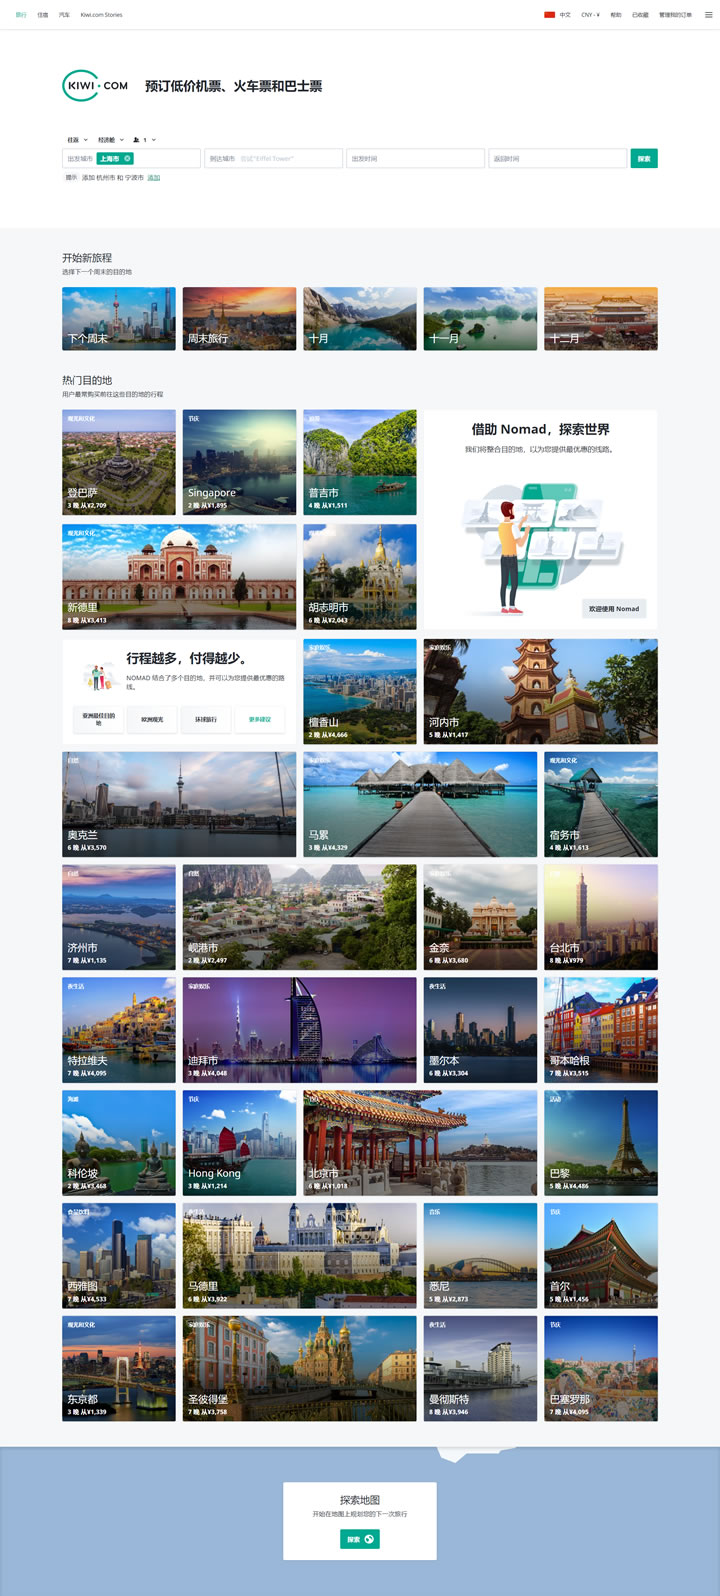 Kiwi.com中国：找到特价机票并发现新目的地